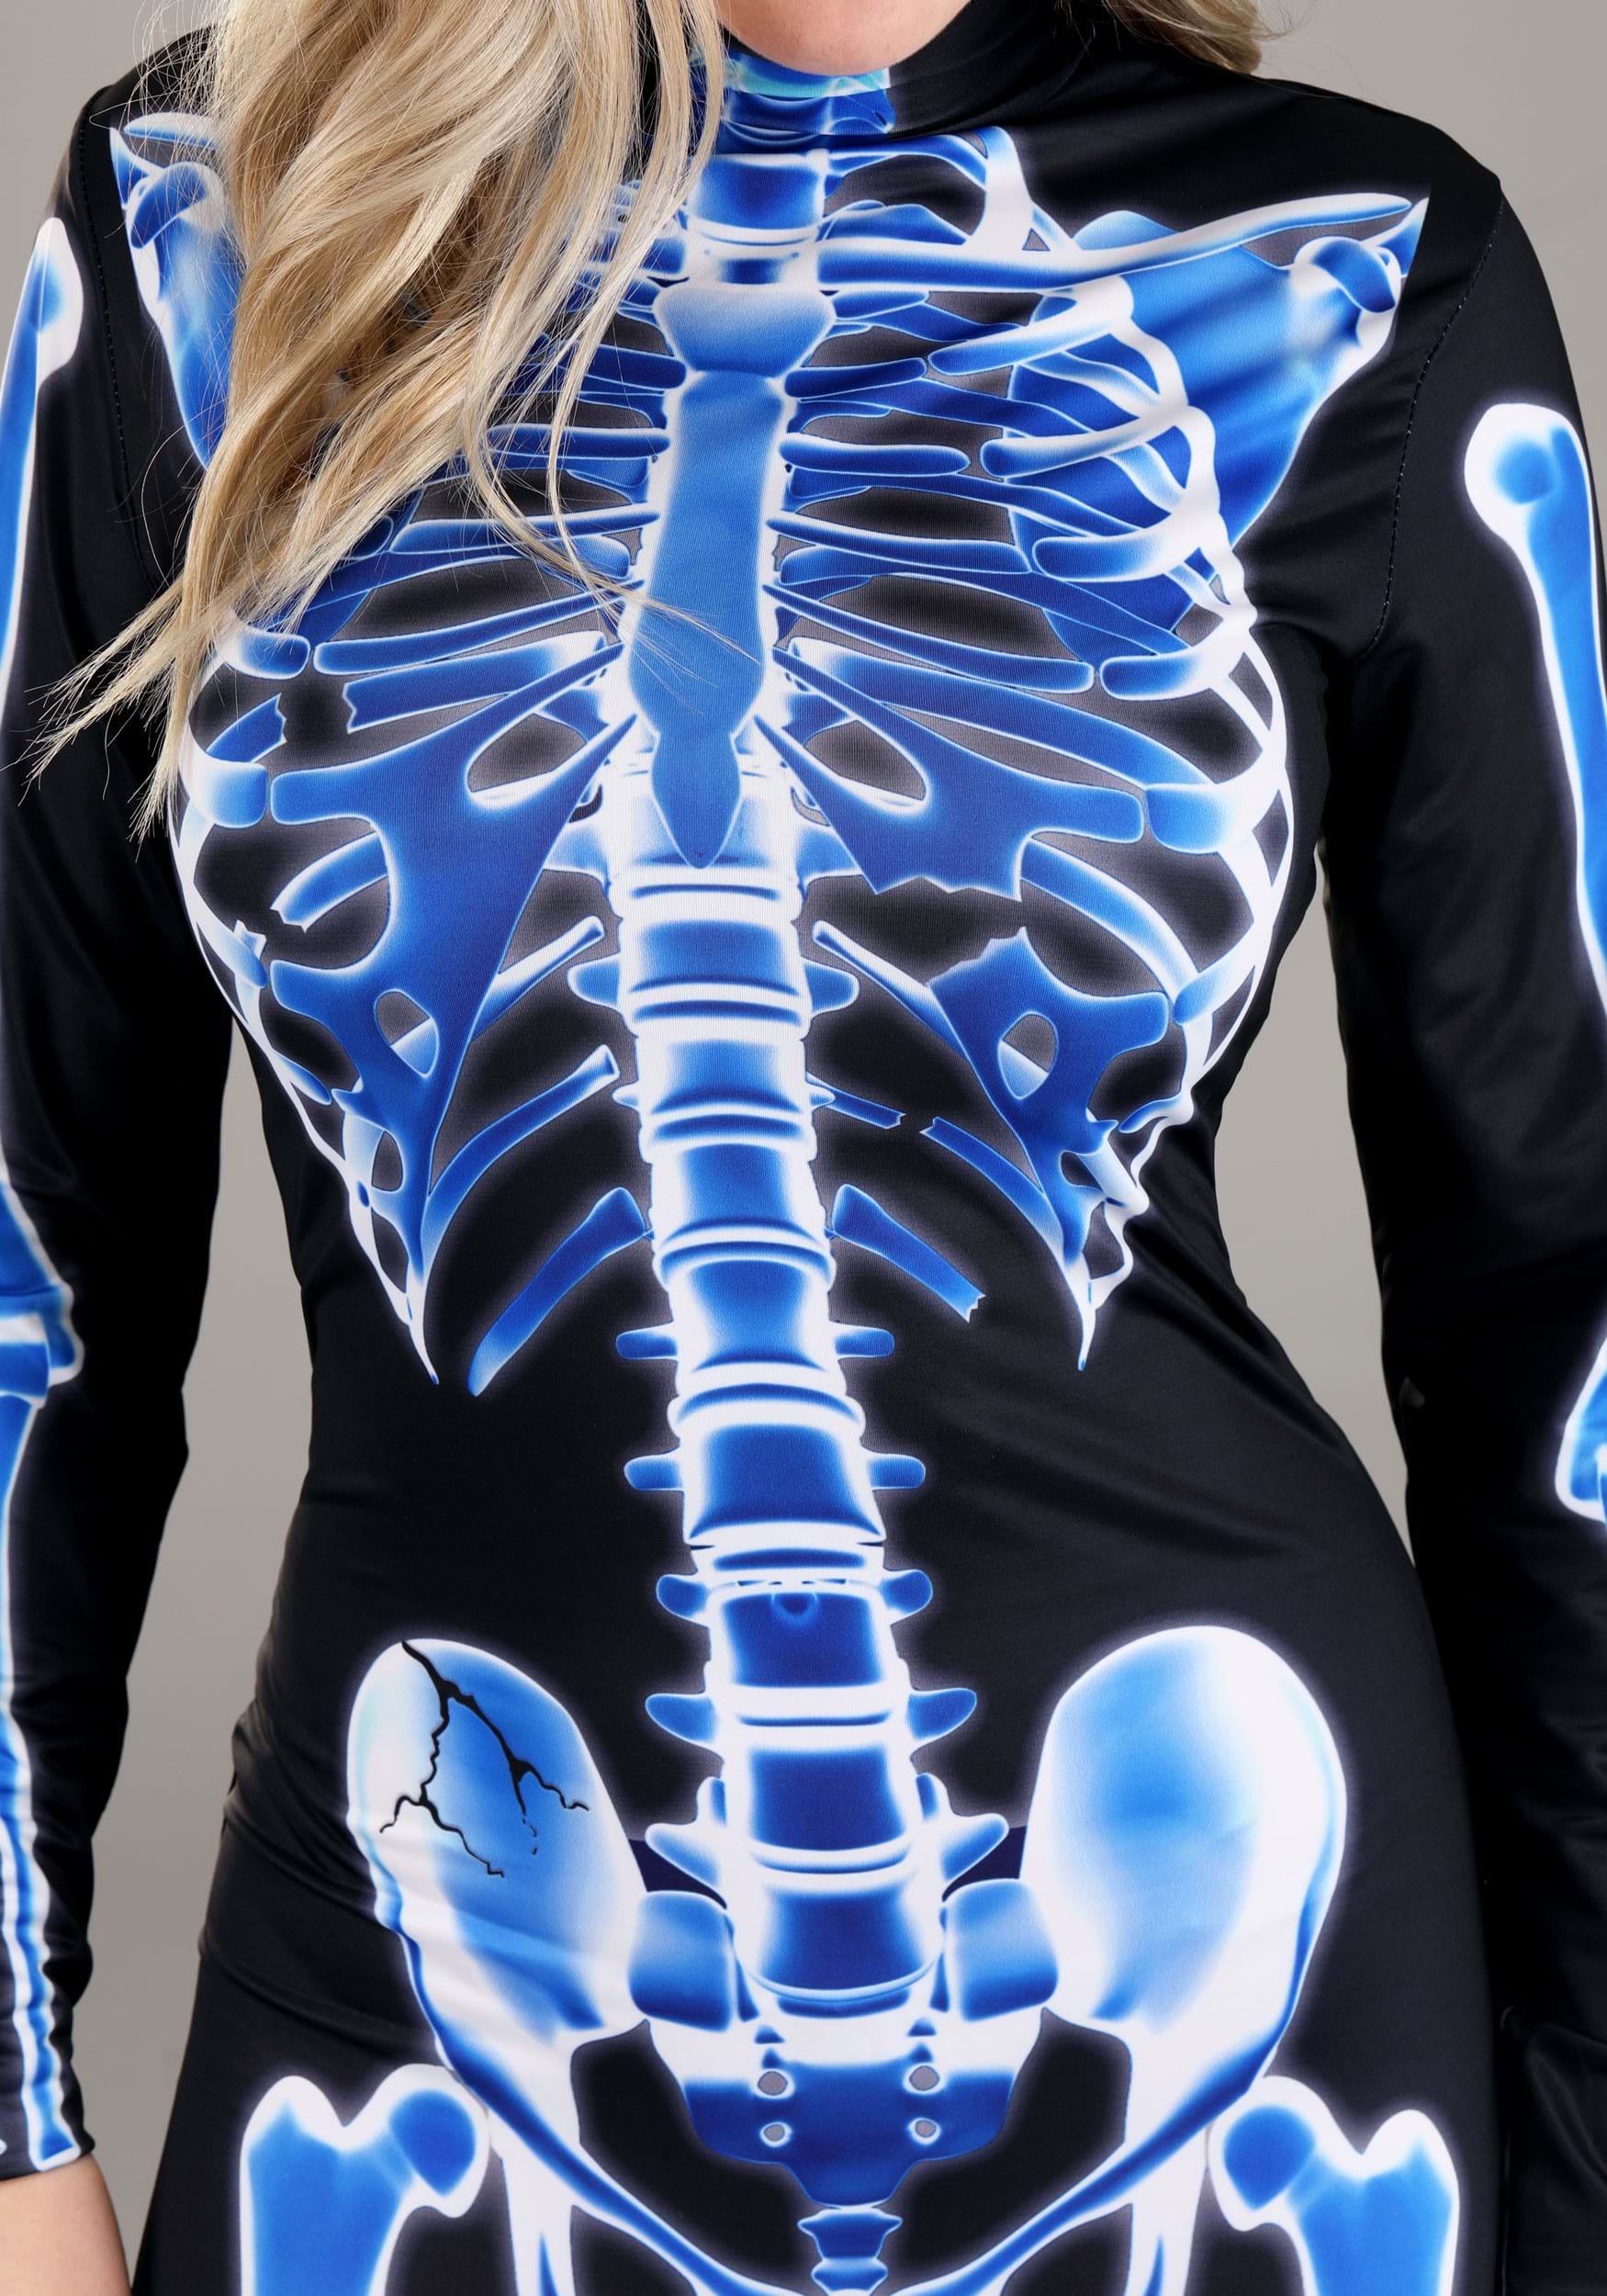 X-Ray Skeleton Jumpsuit Fancy Dress Costume For Women